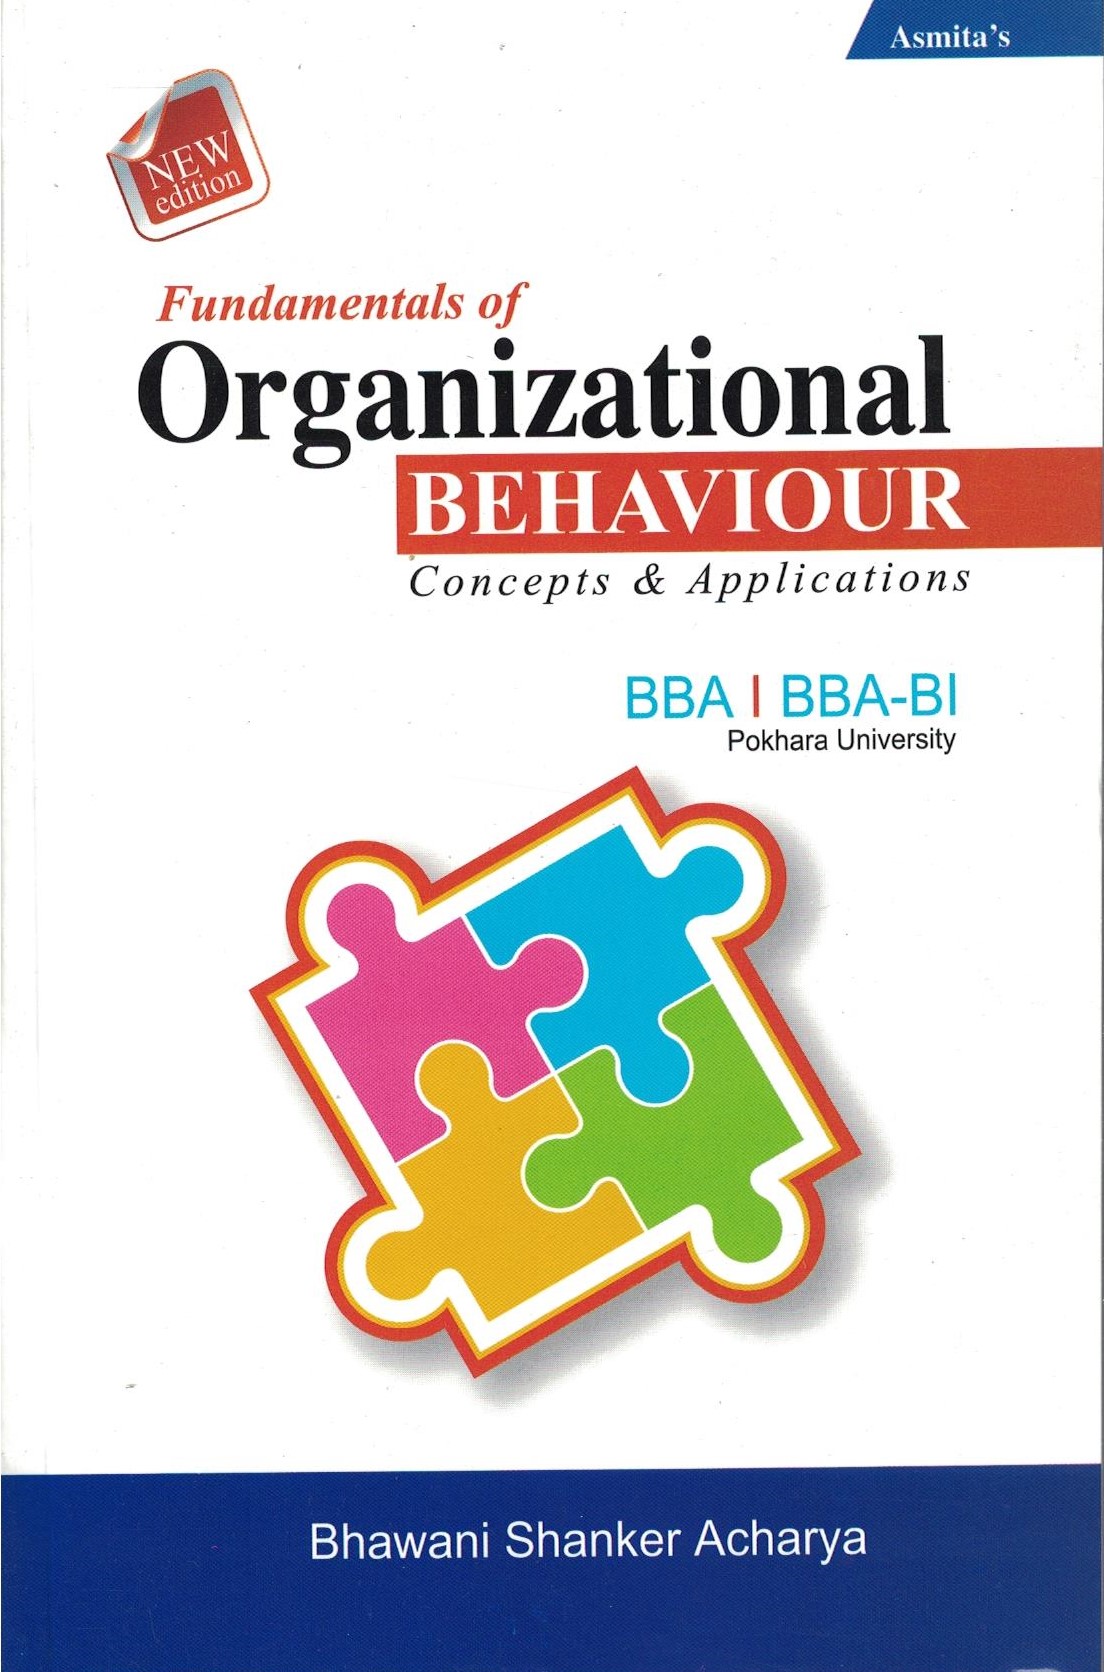 Fundamentals of Organizational Behaviour -BBA-PU-Fourth Semester